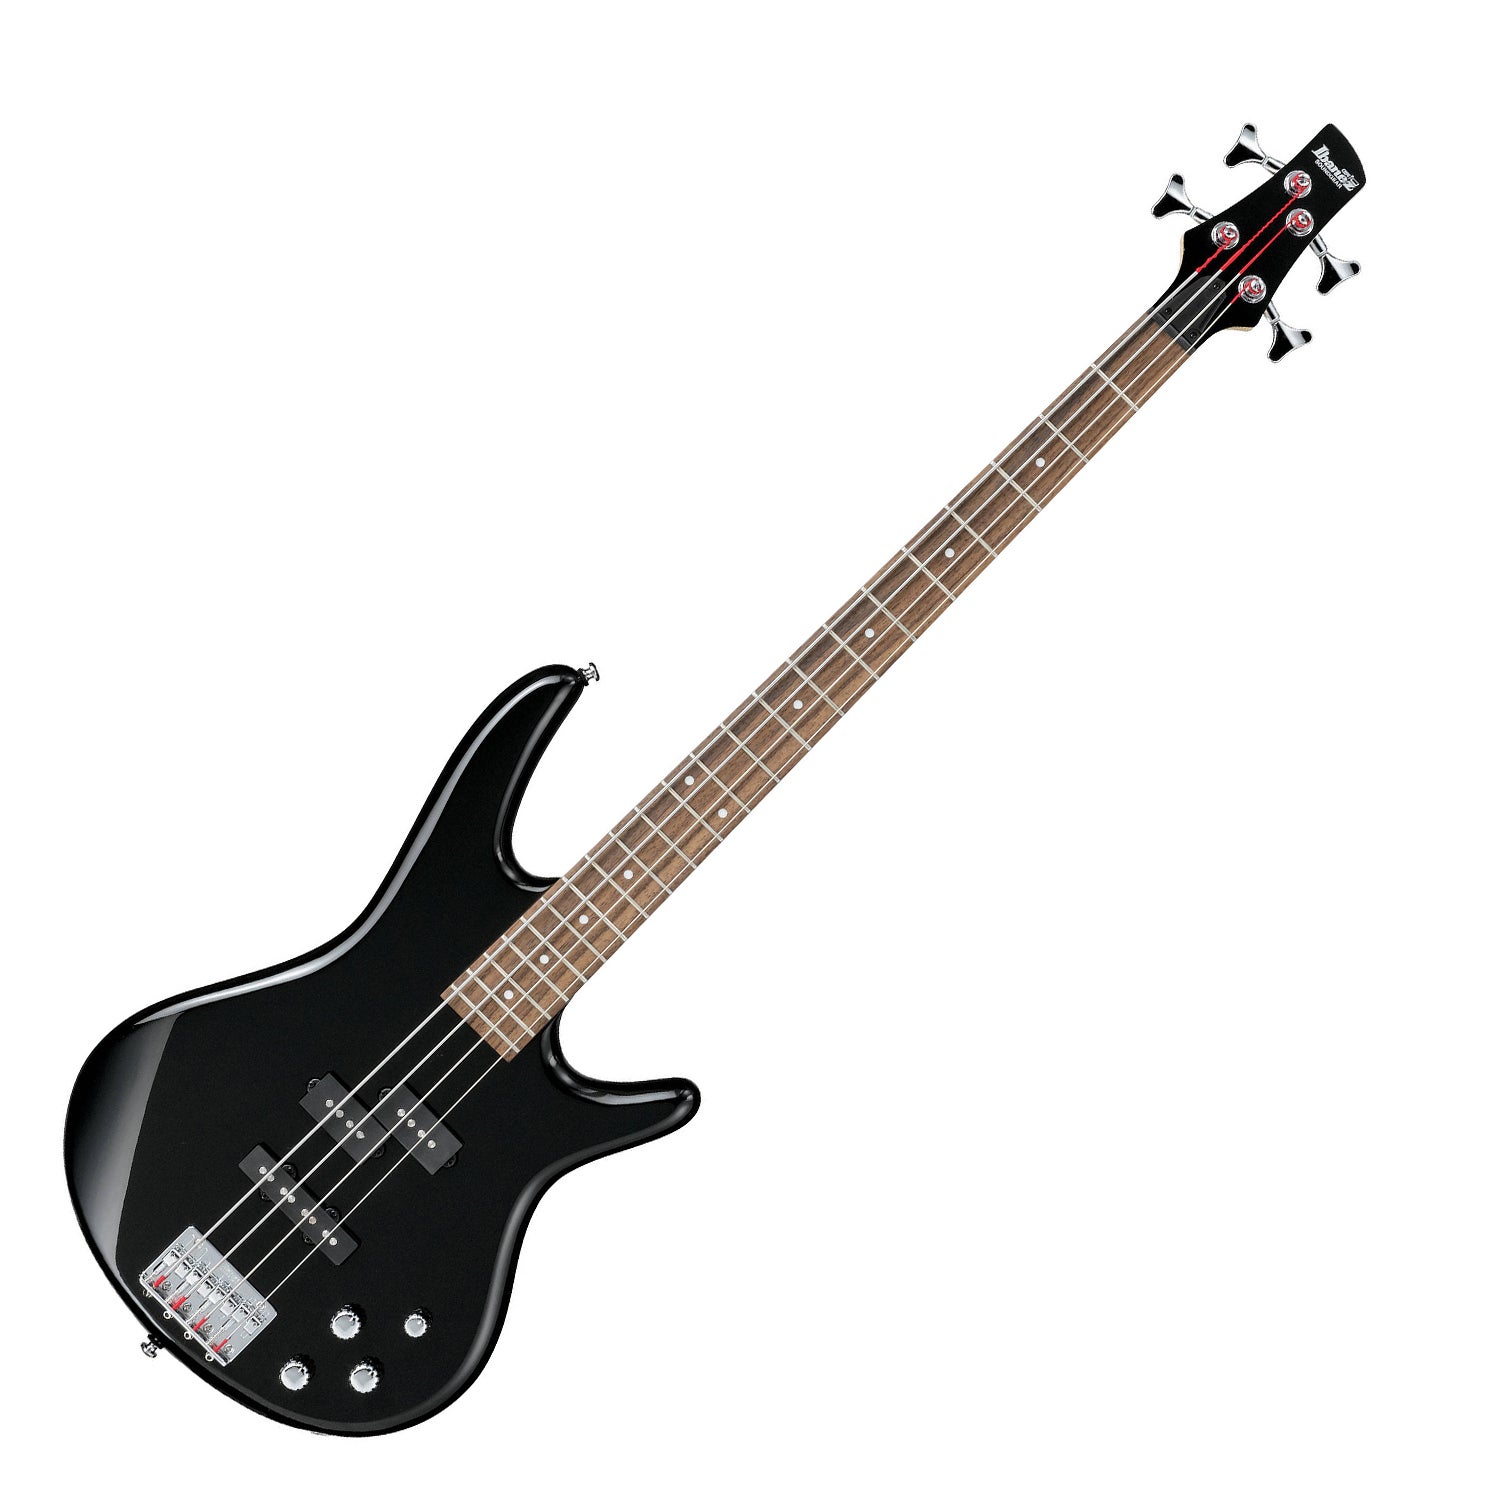 Ibanez Gio Gsr200 Bk Bass Guitar 4 String - Black | Music Works